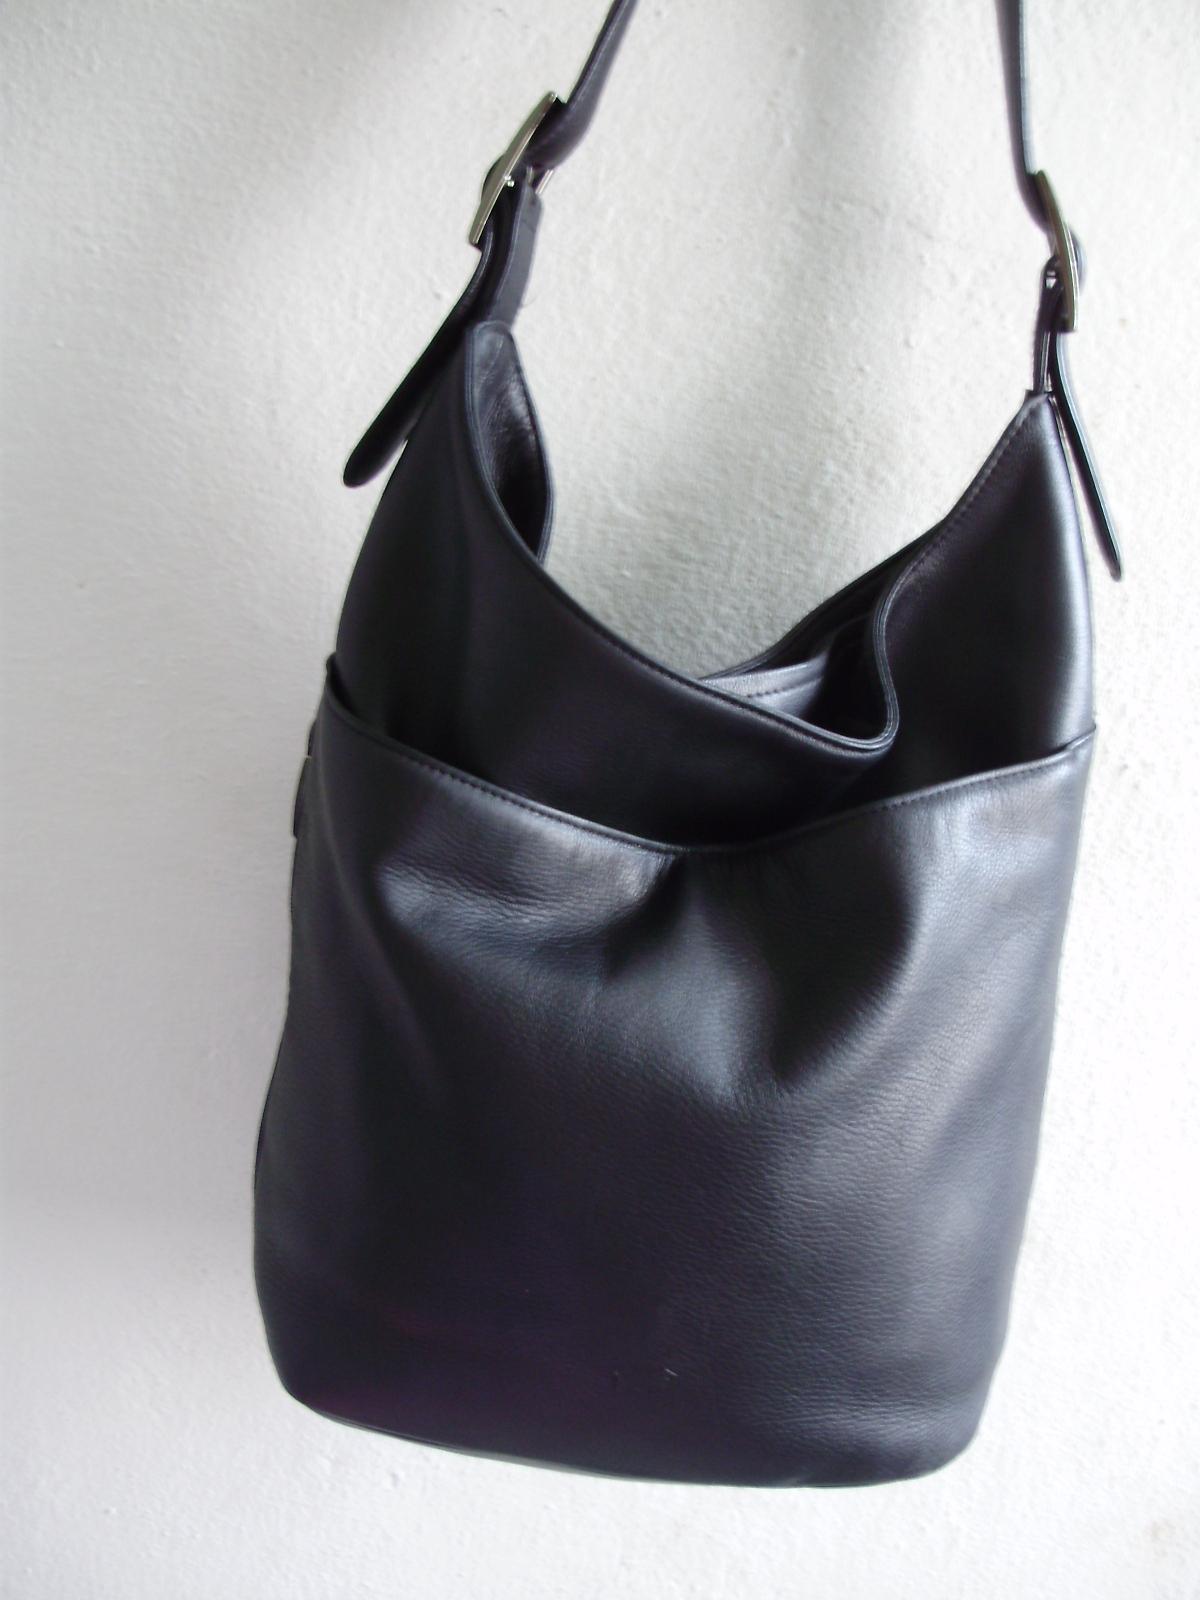 MuDaHbUnDLe: braun buffel shoulder bag (sold)